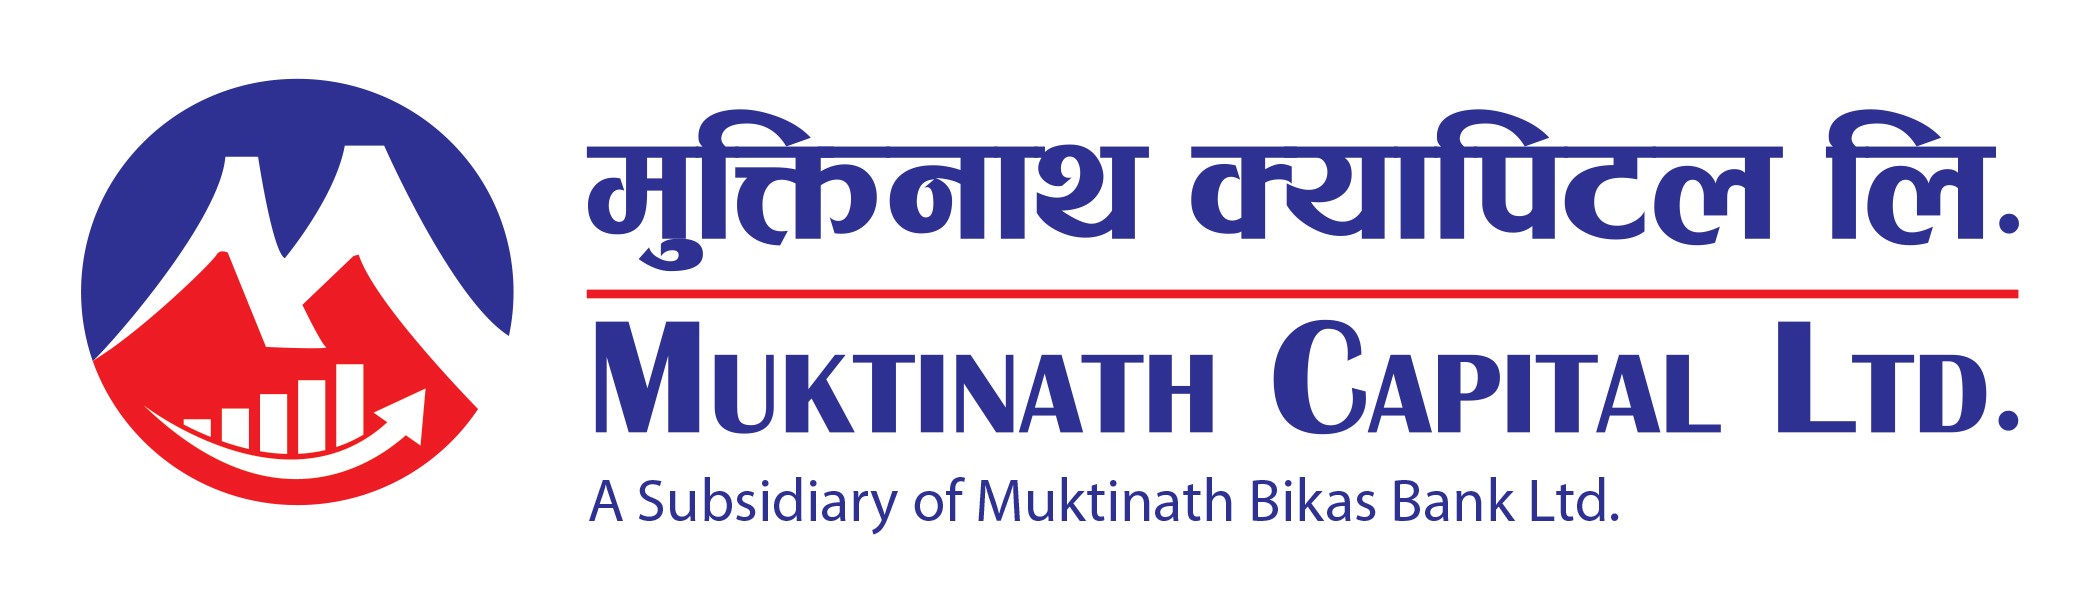 Muktinath Capital Limited